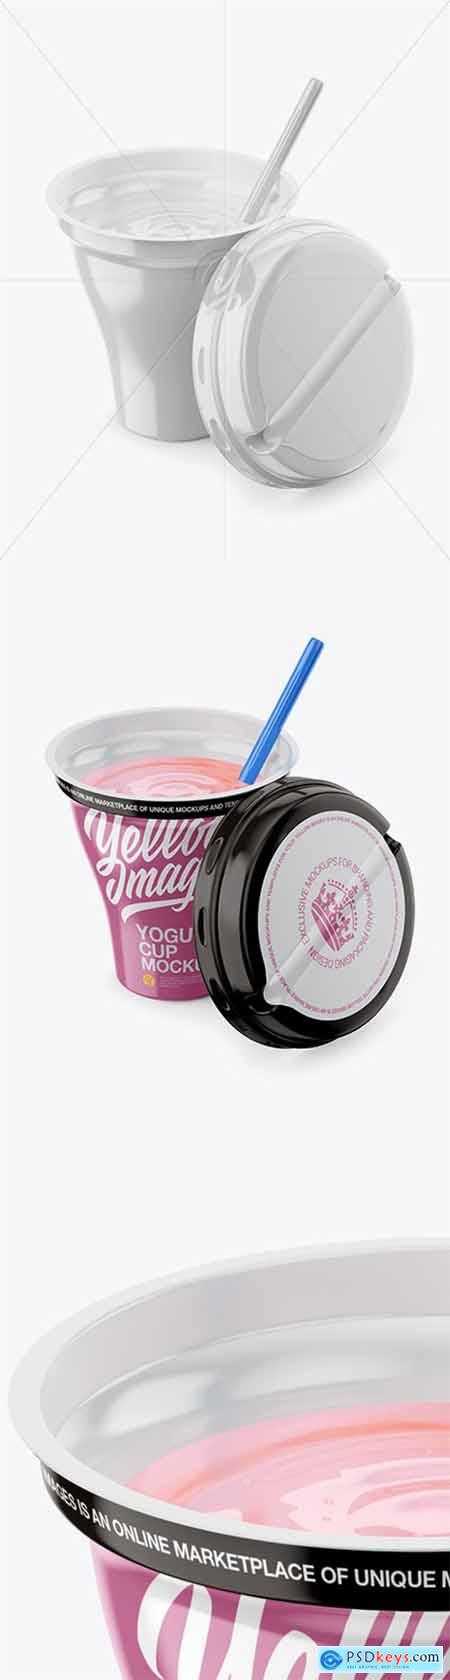 Opened 260g Yogurt Cup With Straw Mockup - Half Side View 21568